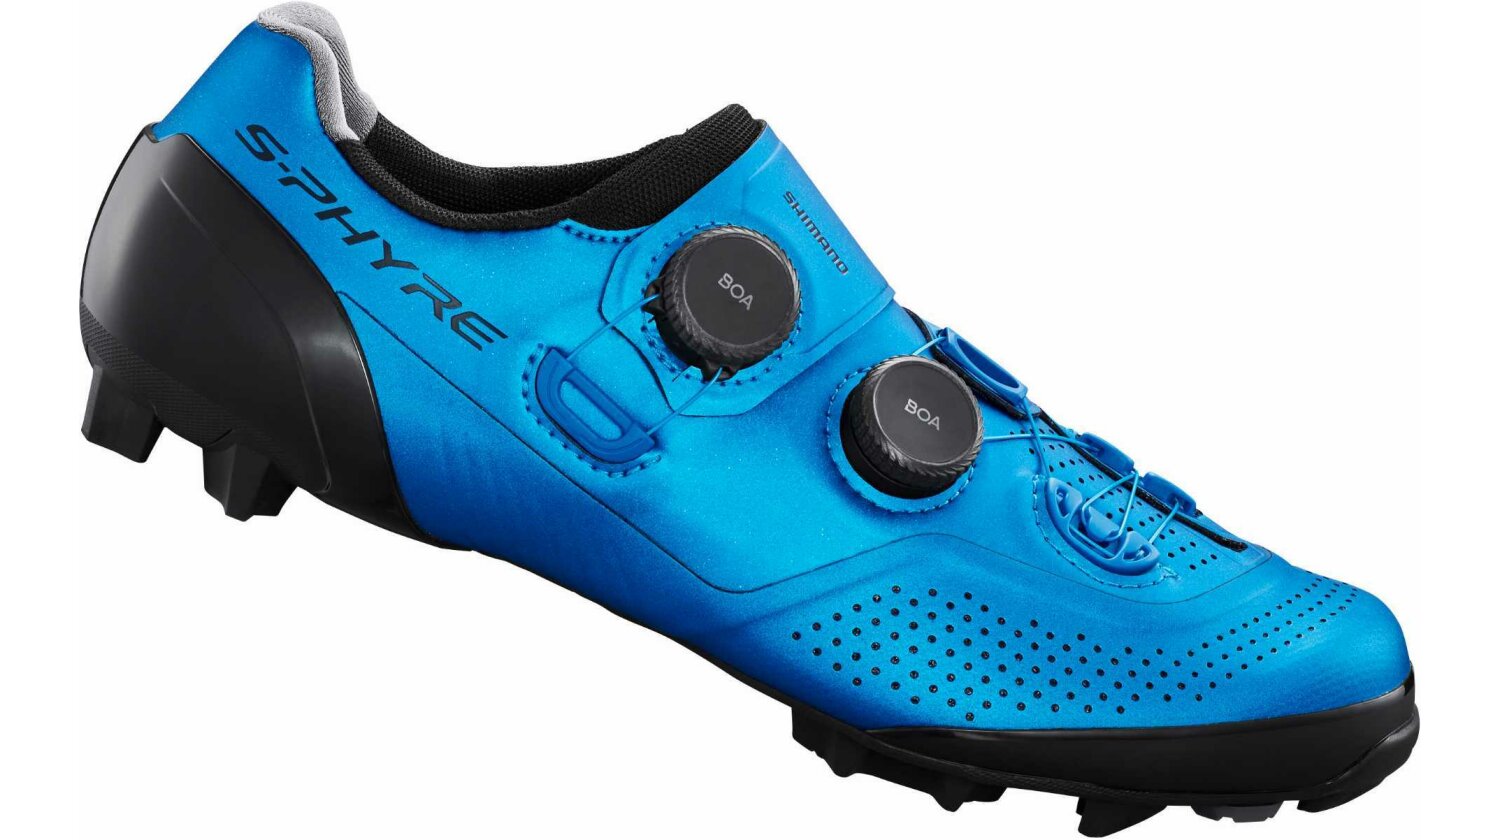 Shimano SH-XC902 S-Phyre MTB-Schuhe blue